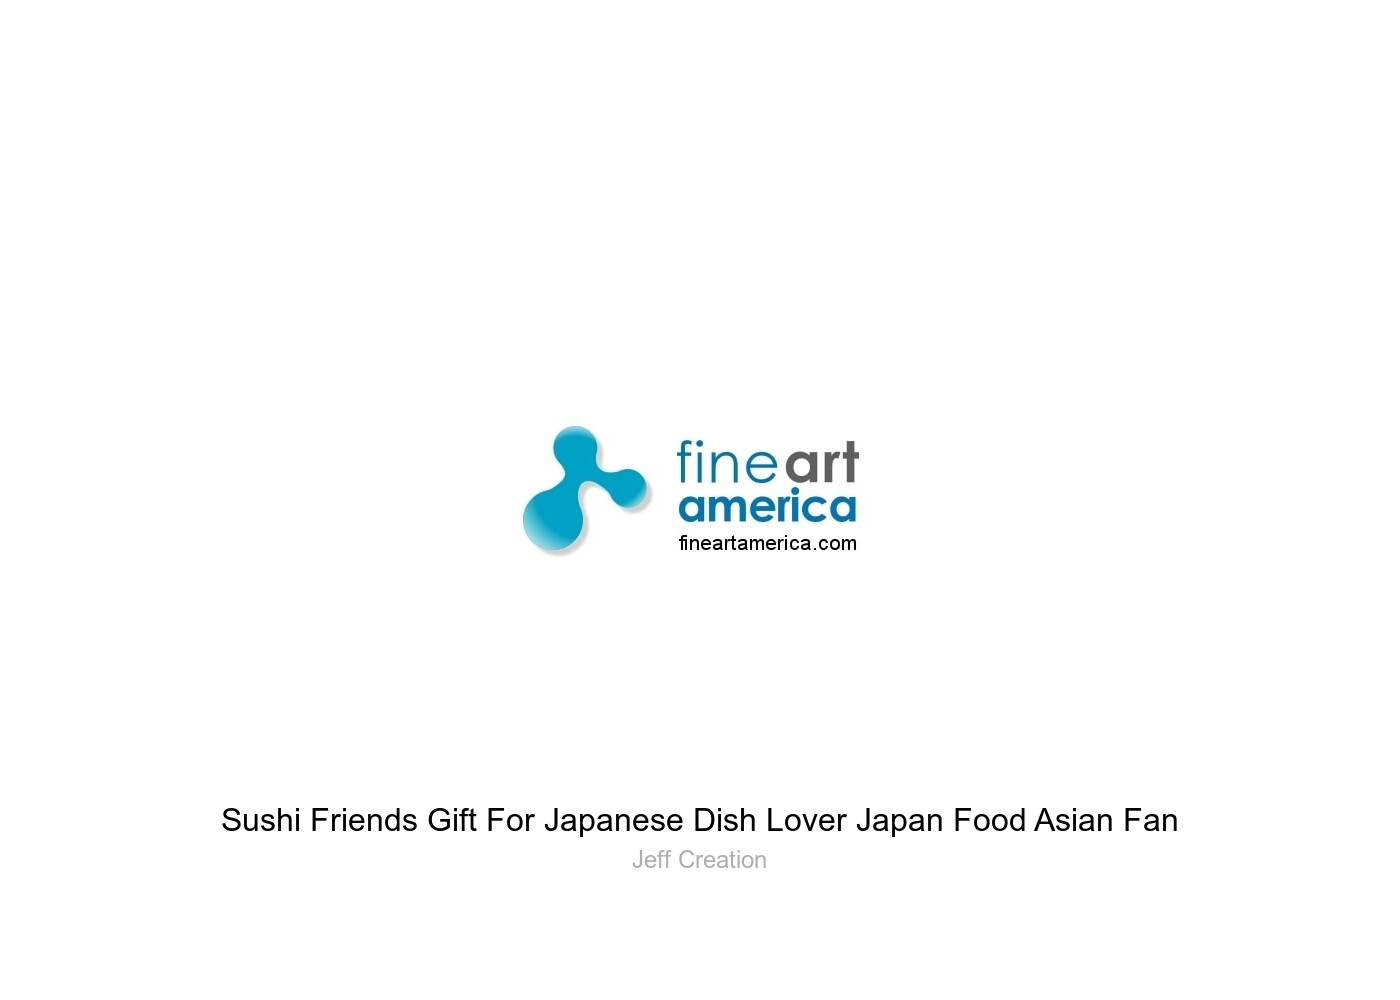 https://render.fineartamerica.com/images/rendered/backview/greeting-card/blank.jpg?artistName=Jeff+Creation&artworkName=Sushi+Friends+Gift+For+Japanese+Dish+Lover+Japan+Food+Asian+Fan&orientation=0&memberIdType=artistid&memberId=888957&domainName=fineartamerica.com